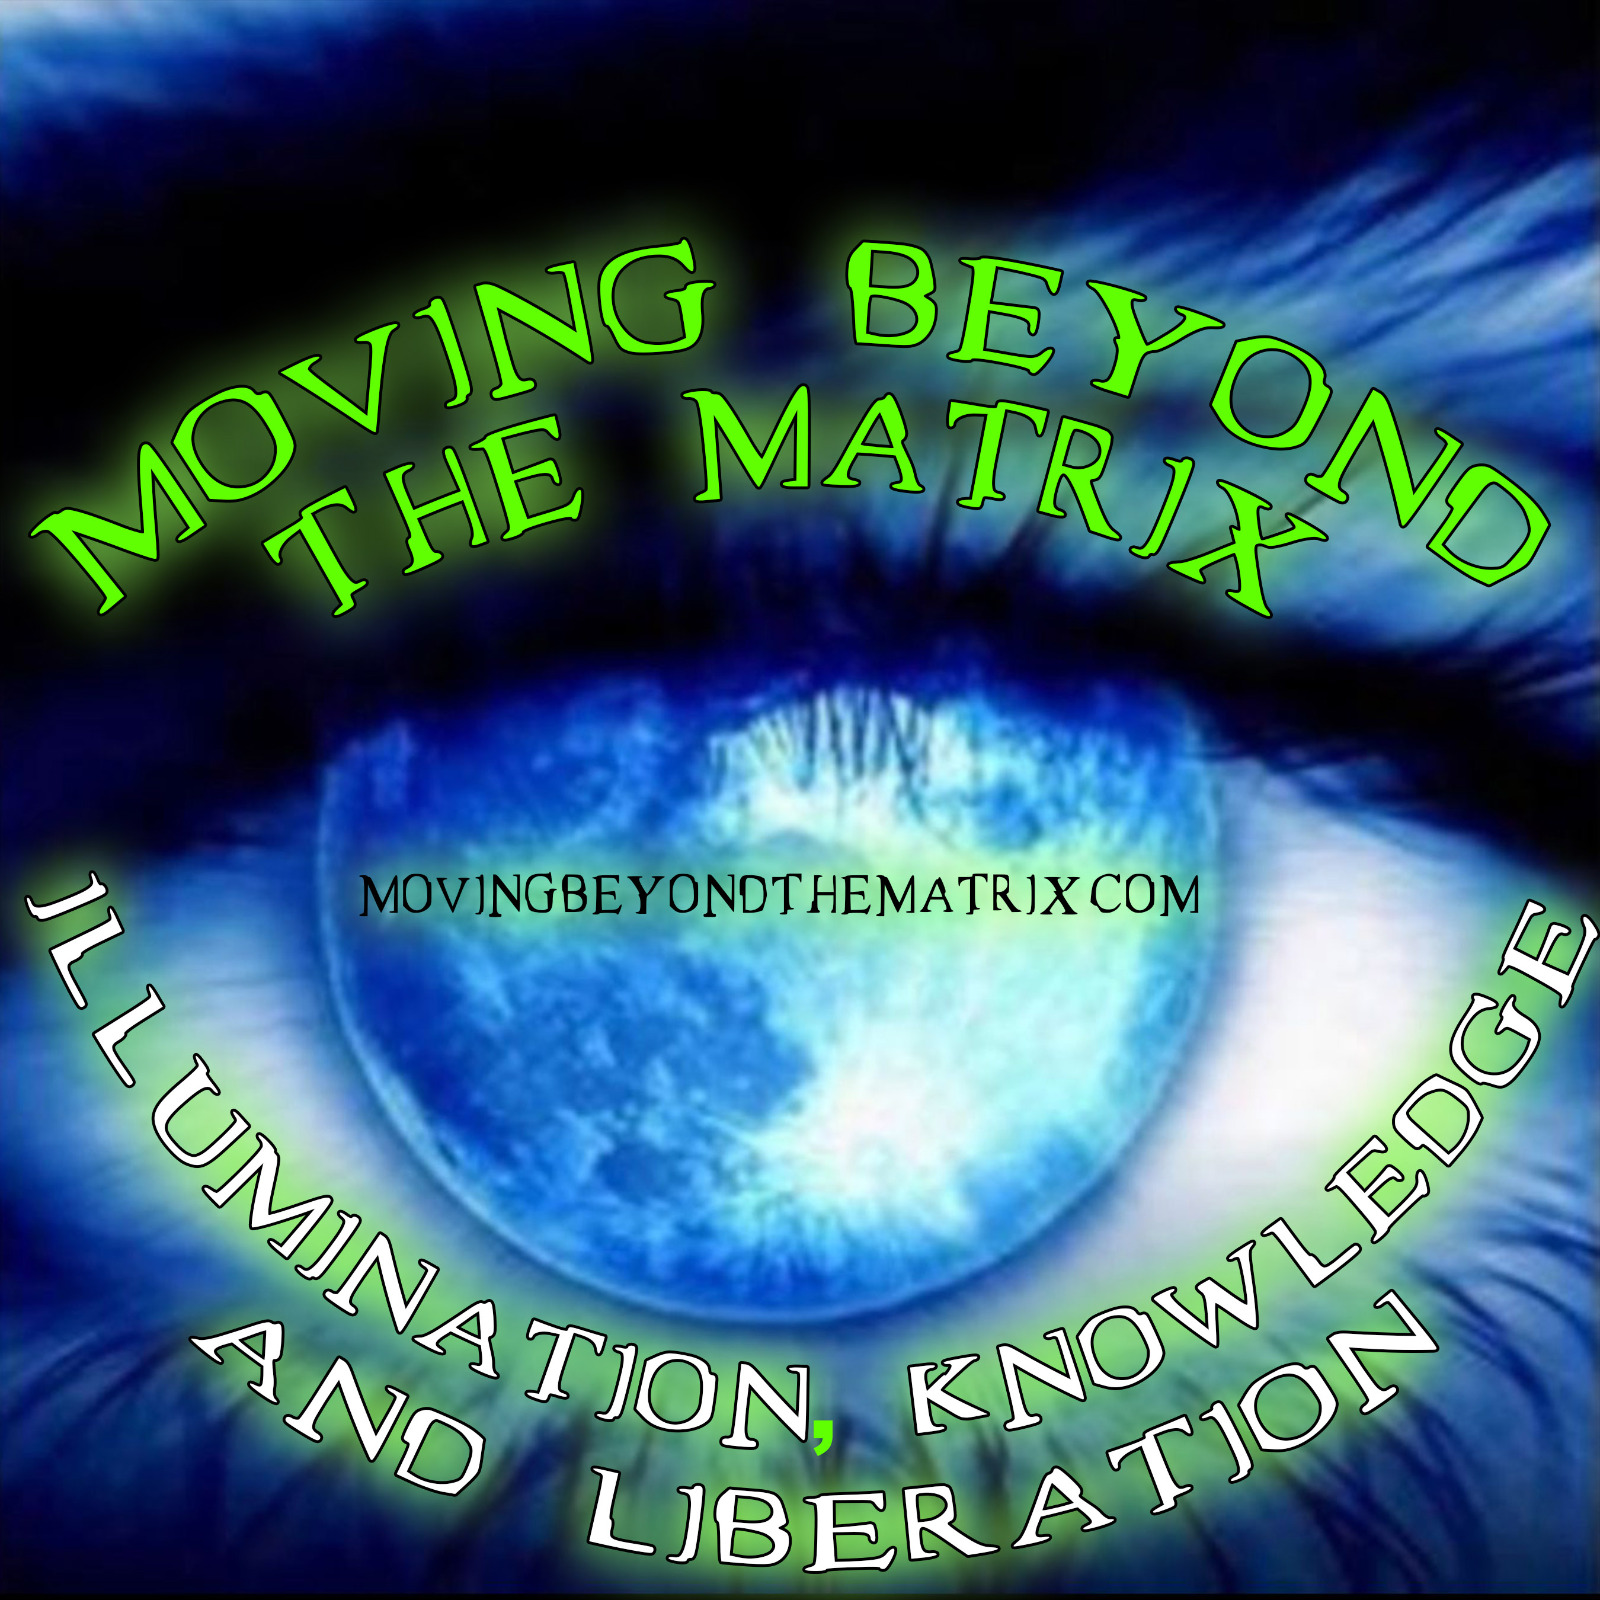 Moving Beyond the Matrix